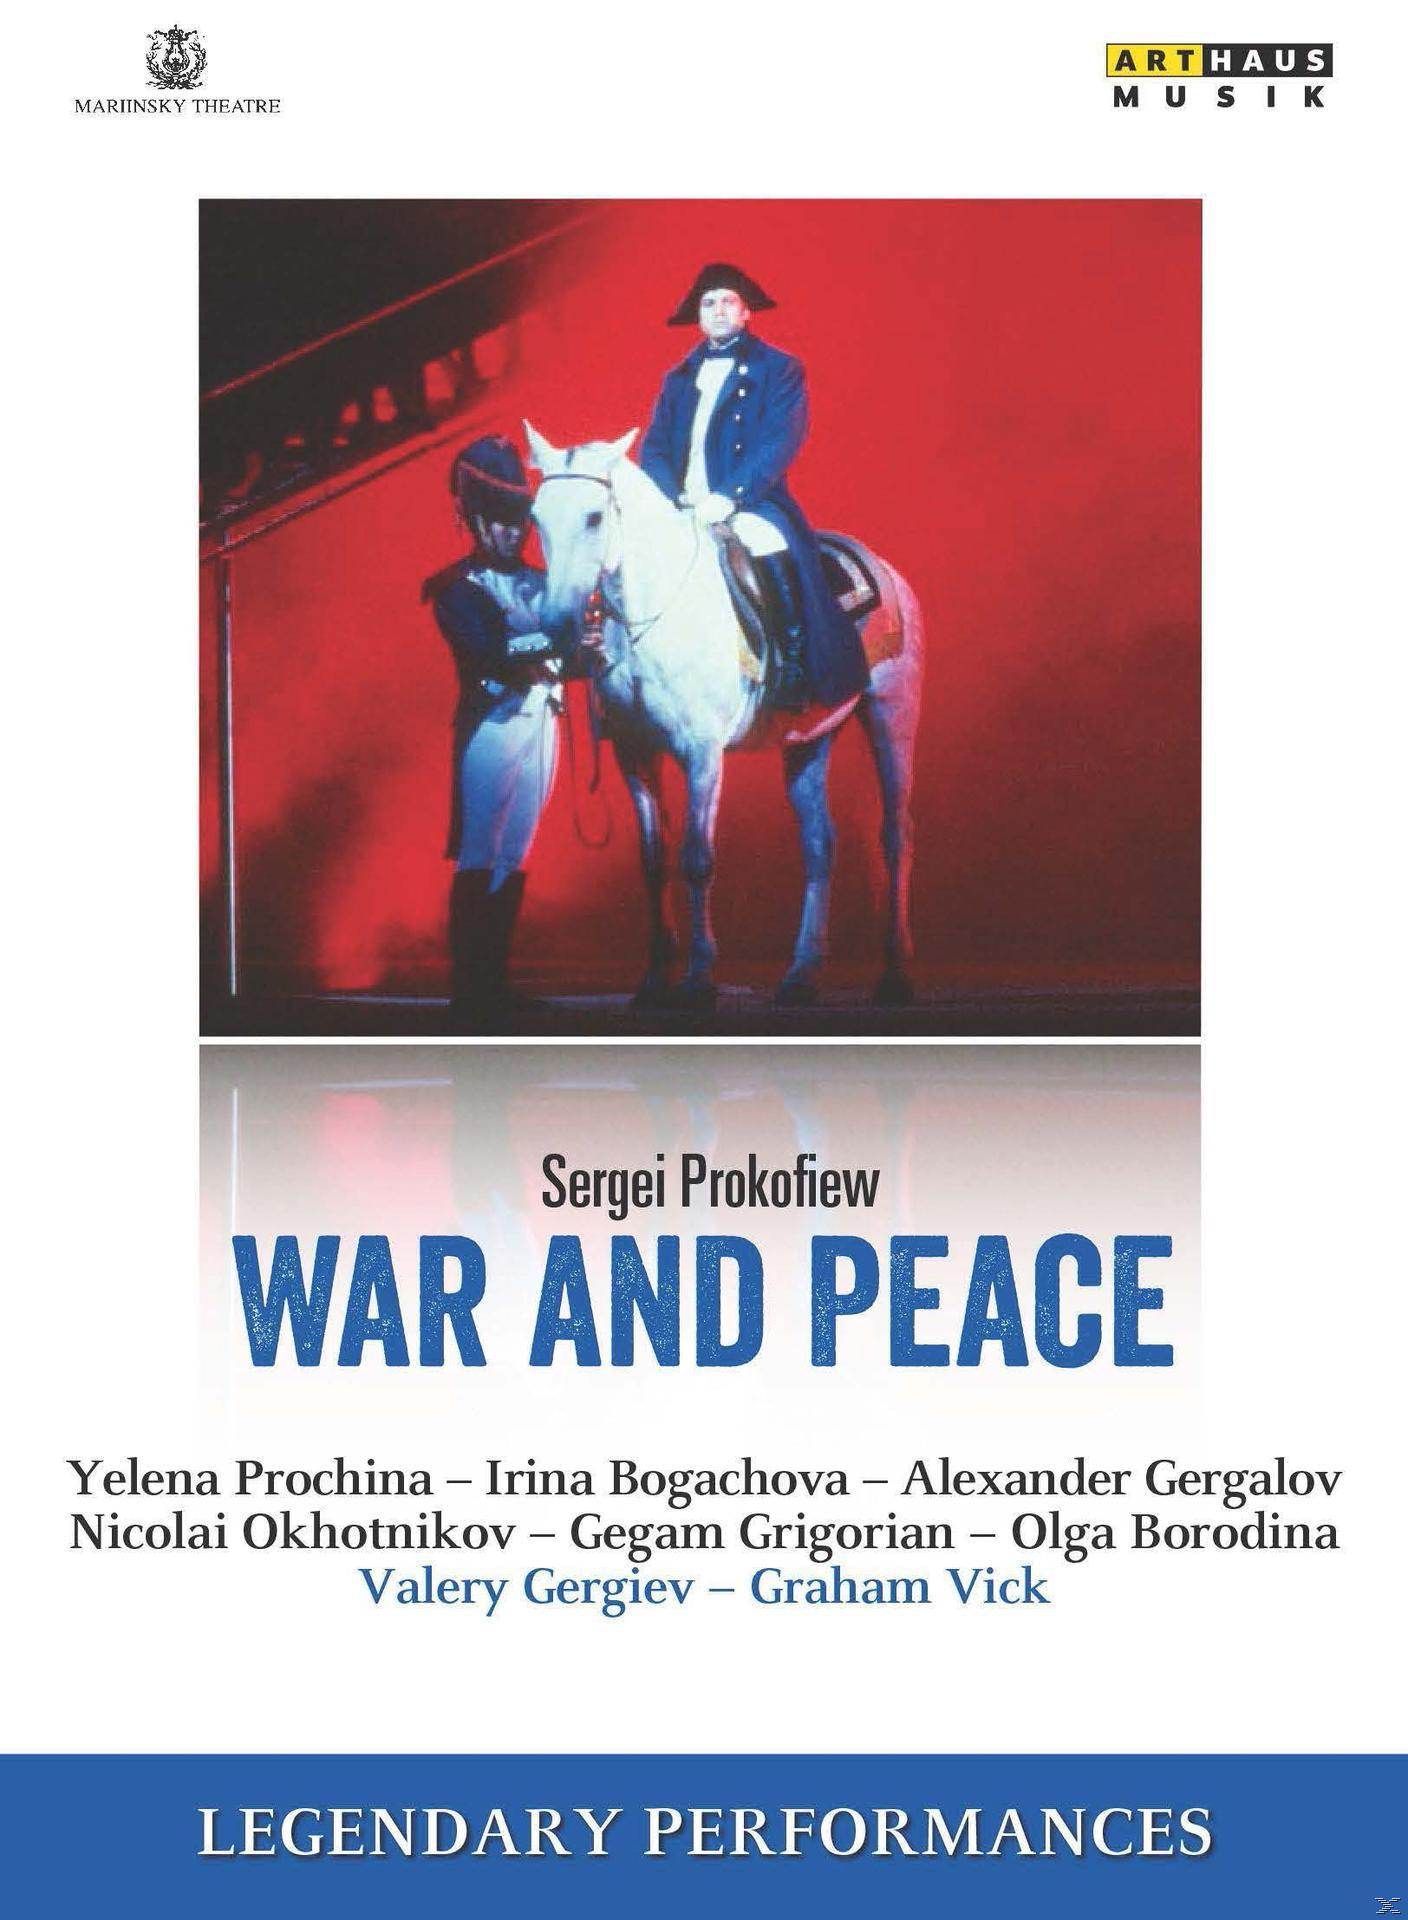 Vassily (DVD) Krieg - Borodina, Alexander Elena Prokina, Und Frieden Gegam Gergalov, Gerelo, Olga Grigorian, Kirov Orchestra -